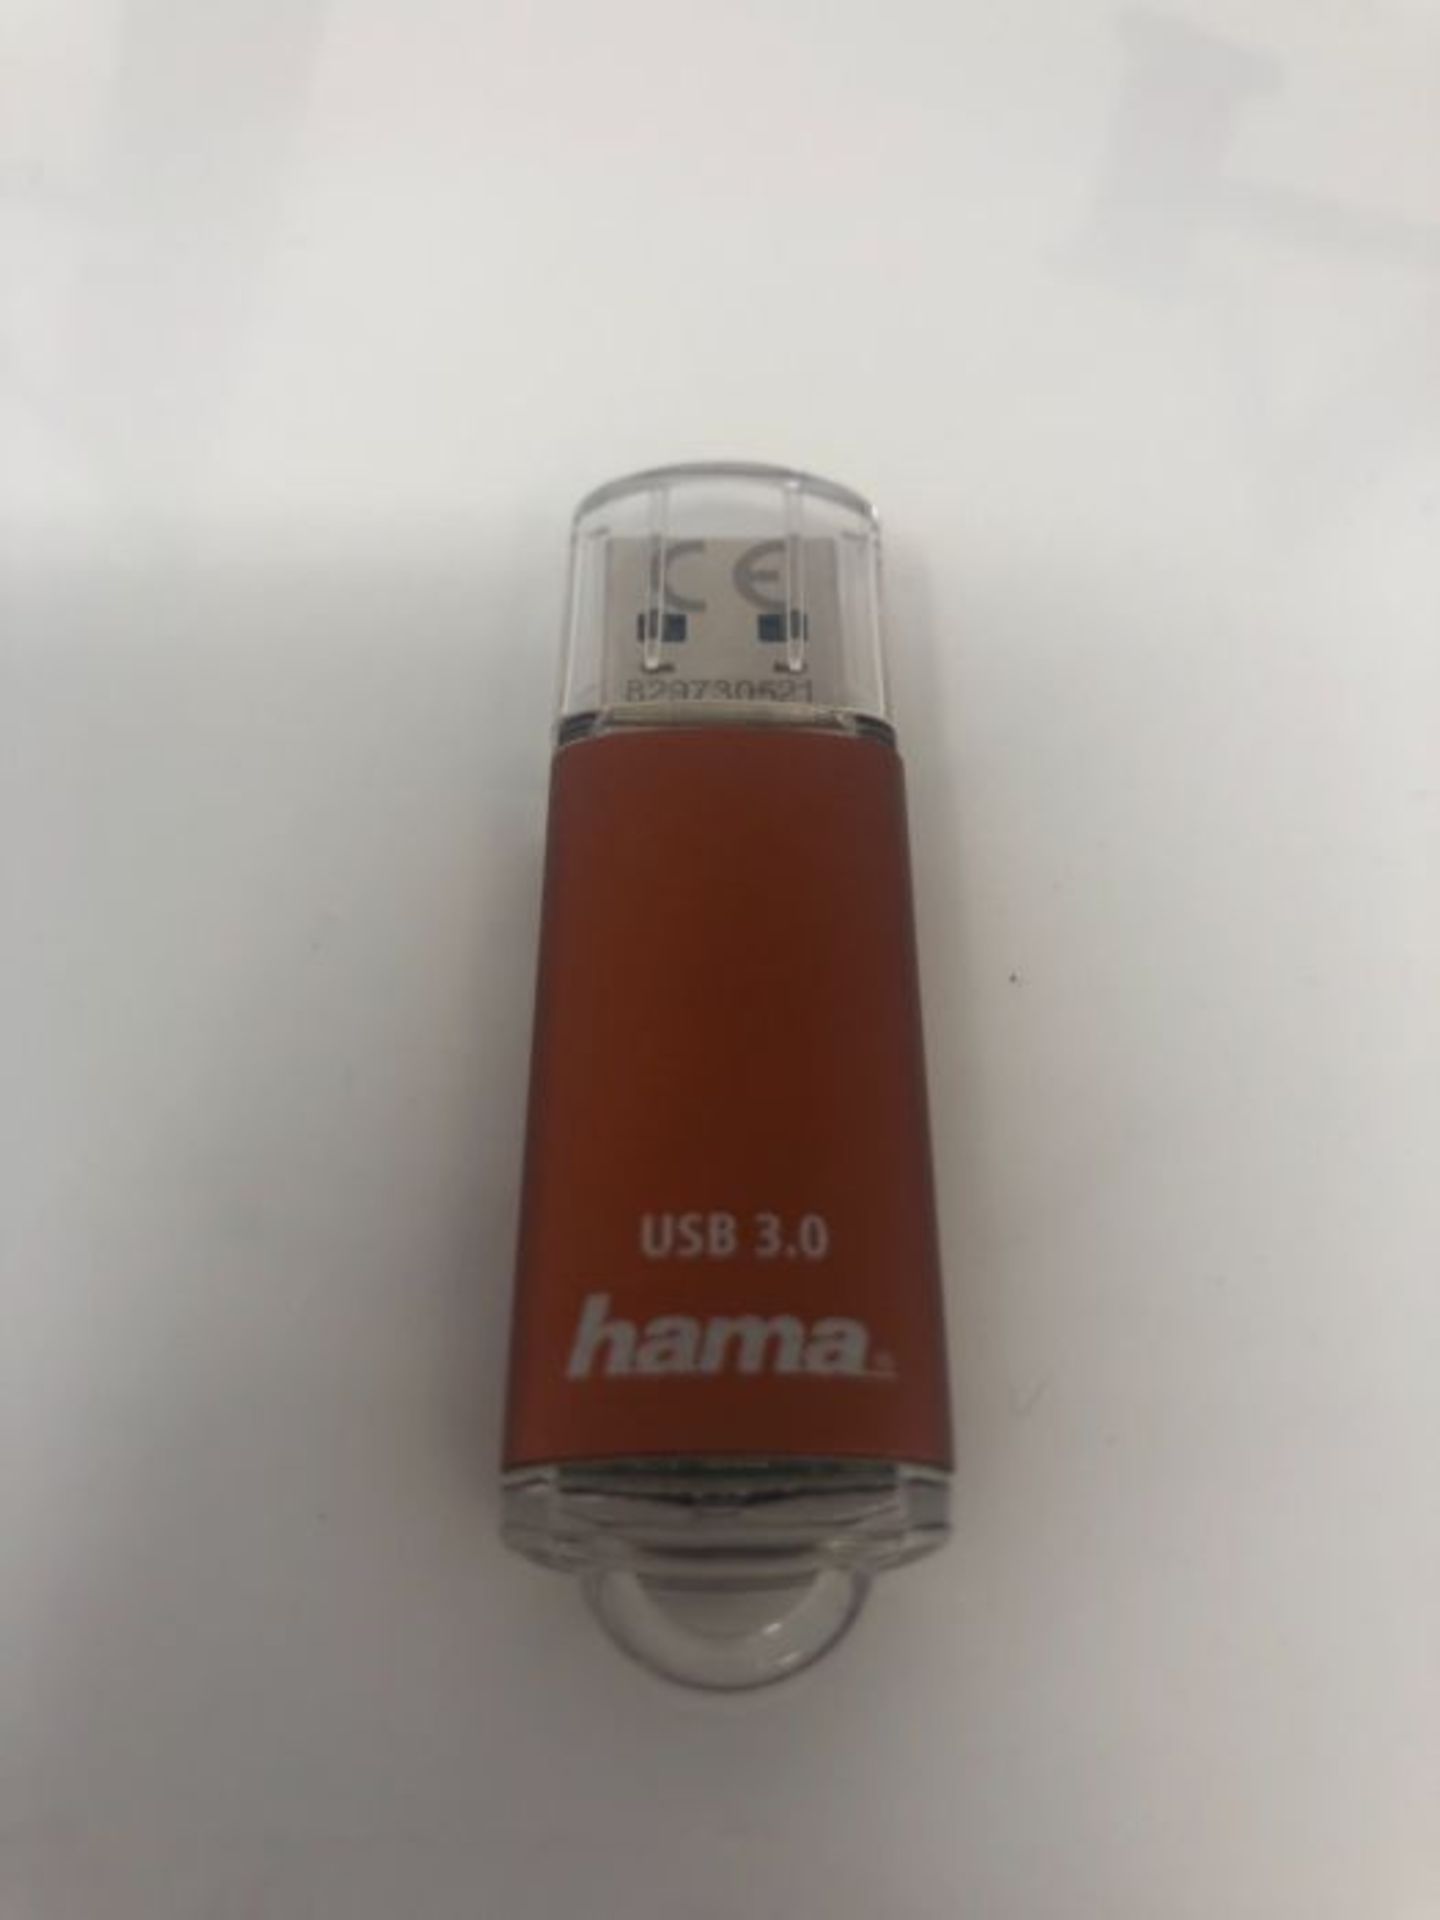 Hama Laeta FlashPen USB Stick USB 3.0, 16GB, 40MB/s - Brown brown brown 256 GB - Image 3 of 3